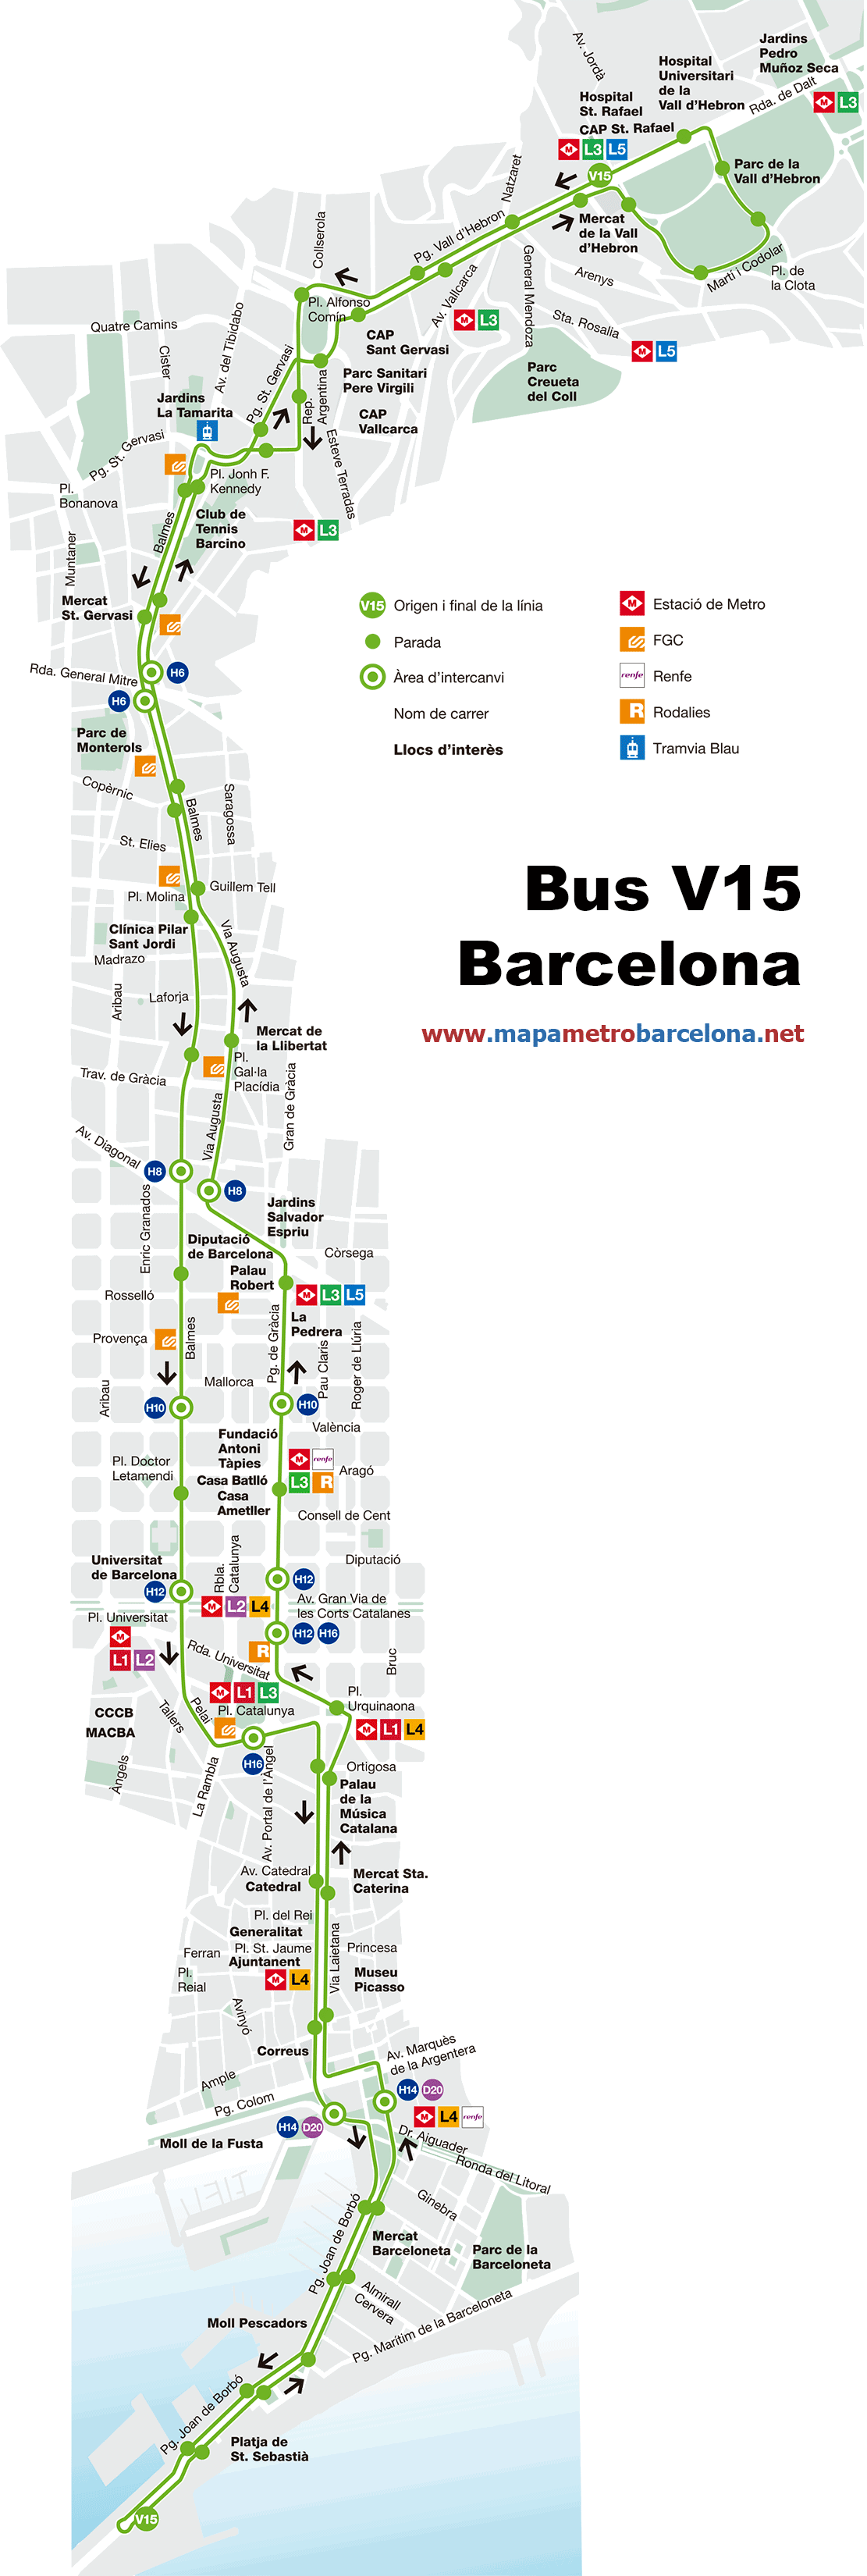 Barcelona bus map line V15 2014